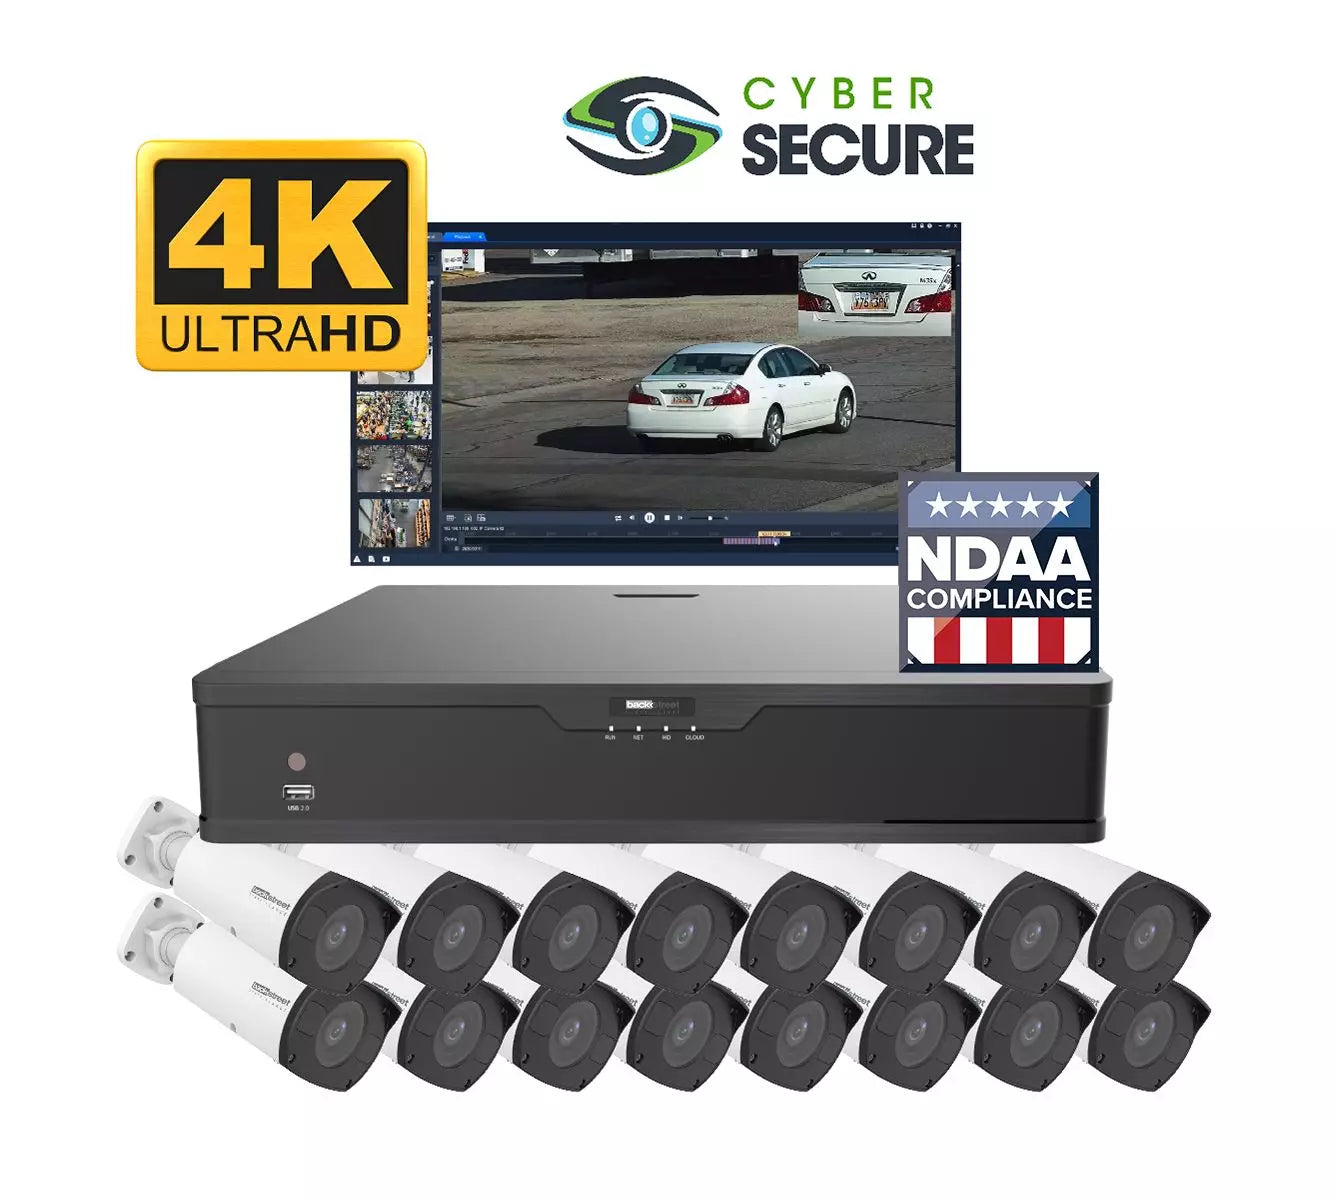 Backstreet Surveillance CSKIT16-B-4K 16 Bullet Style Zoom Security Camera System, 16-Channel